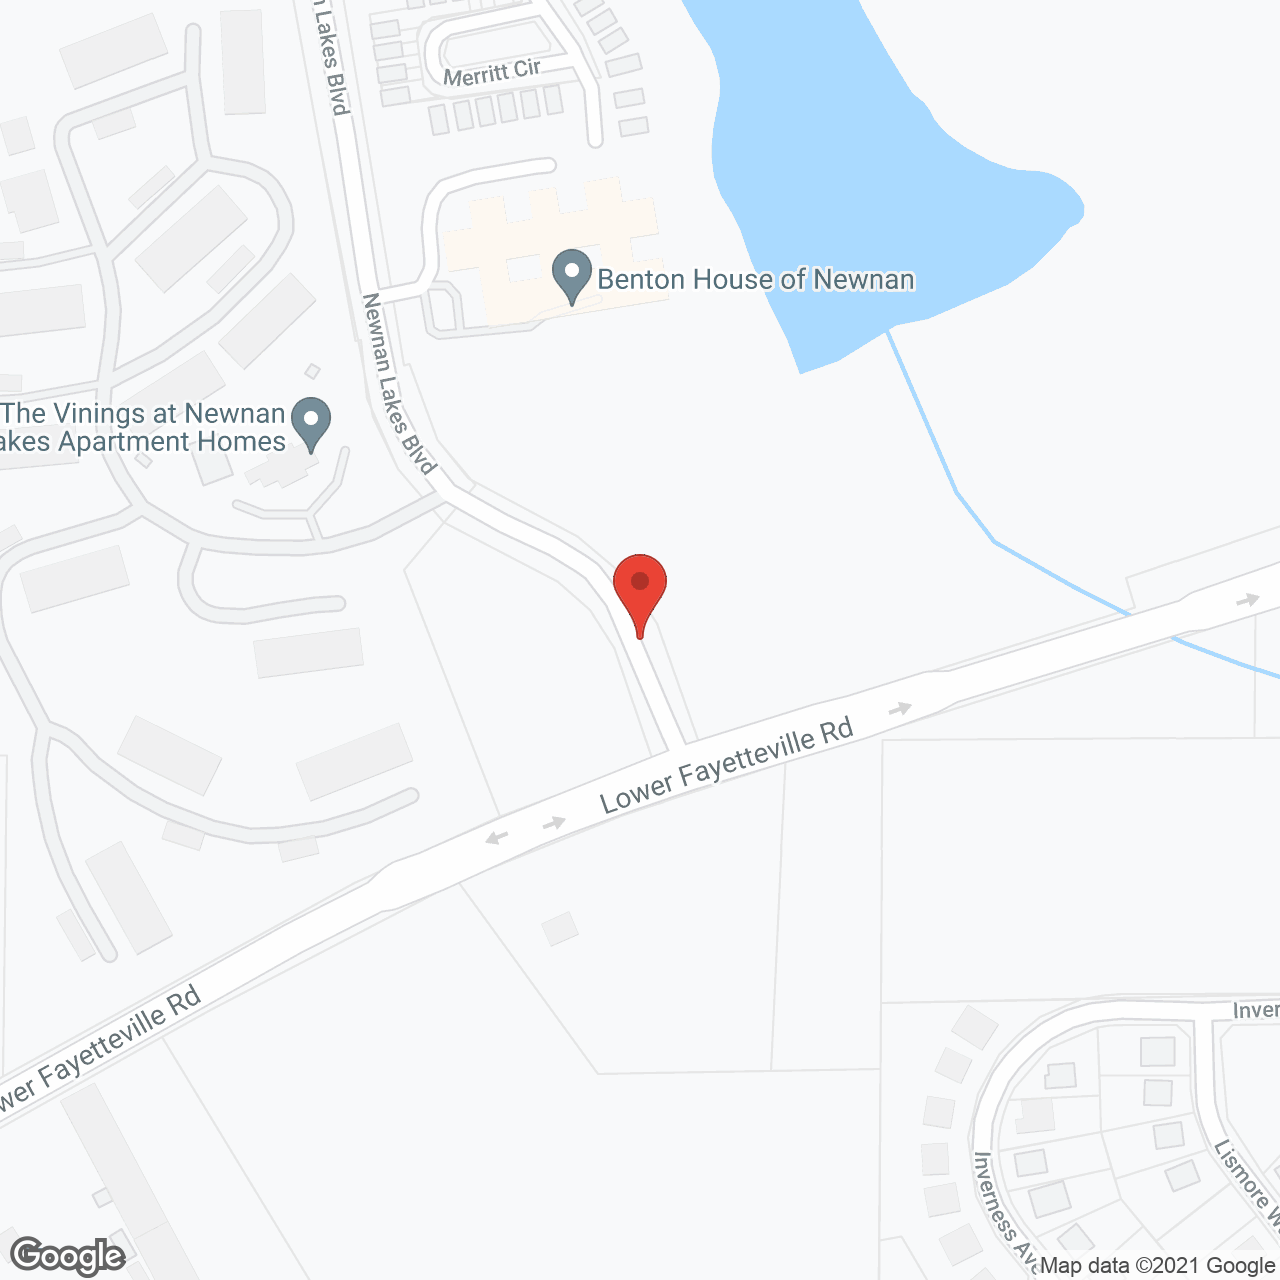 Benton House of Newnan Lakes in google map